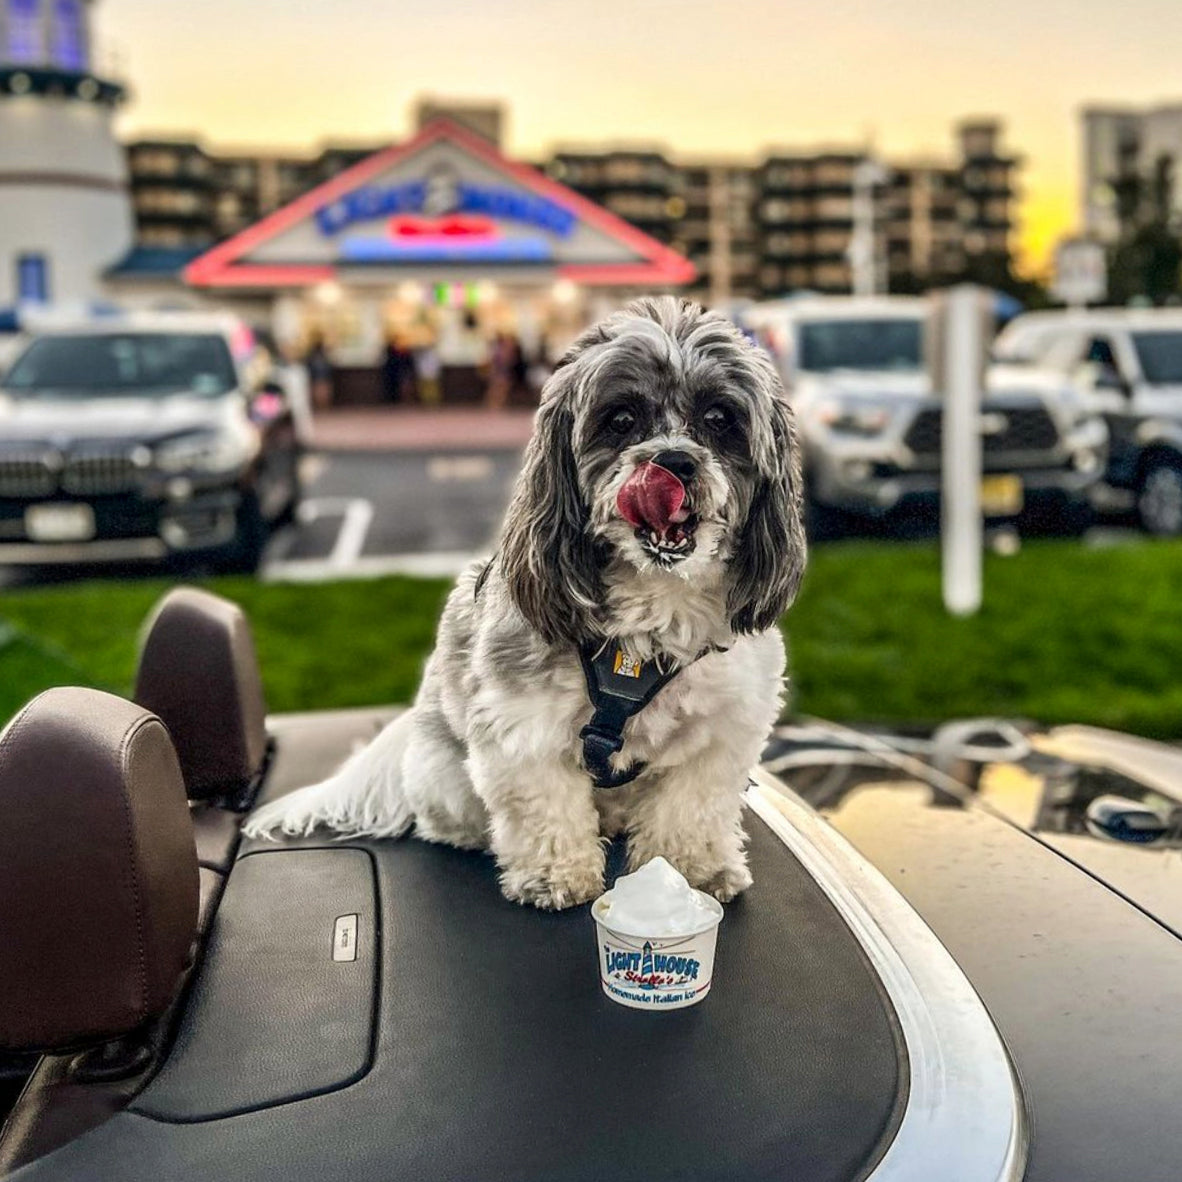 A dog enjoying a cup of Strollo's Lighthouse soft serve ice cream